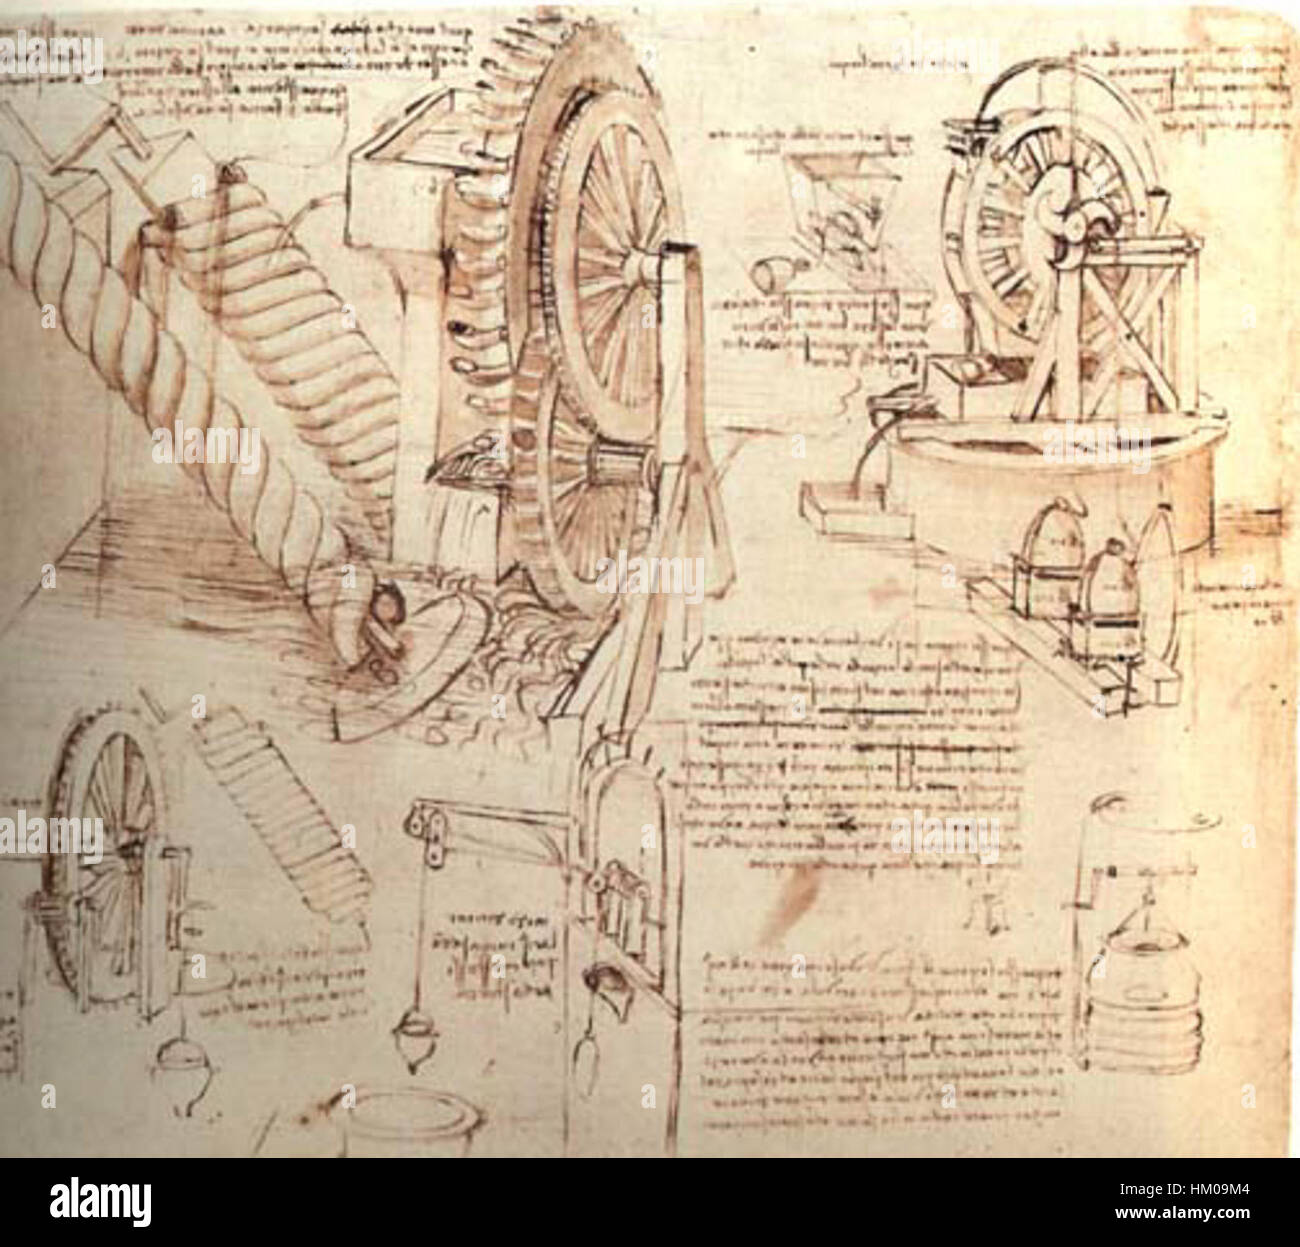 Leonardo da vinci, Drawings of Water Lifting Devices Stock Photo